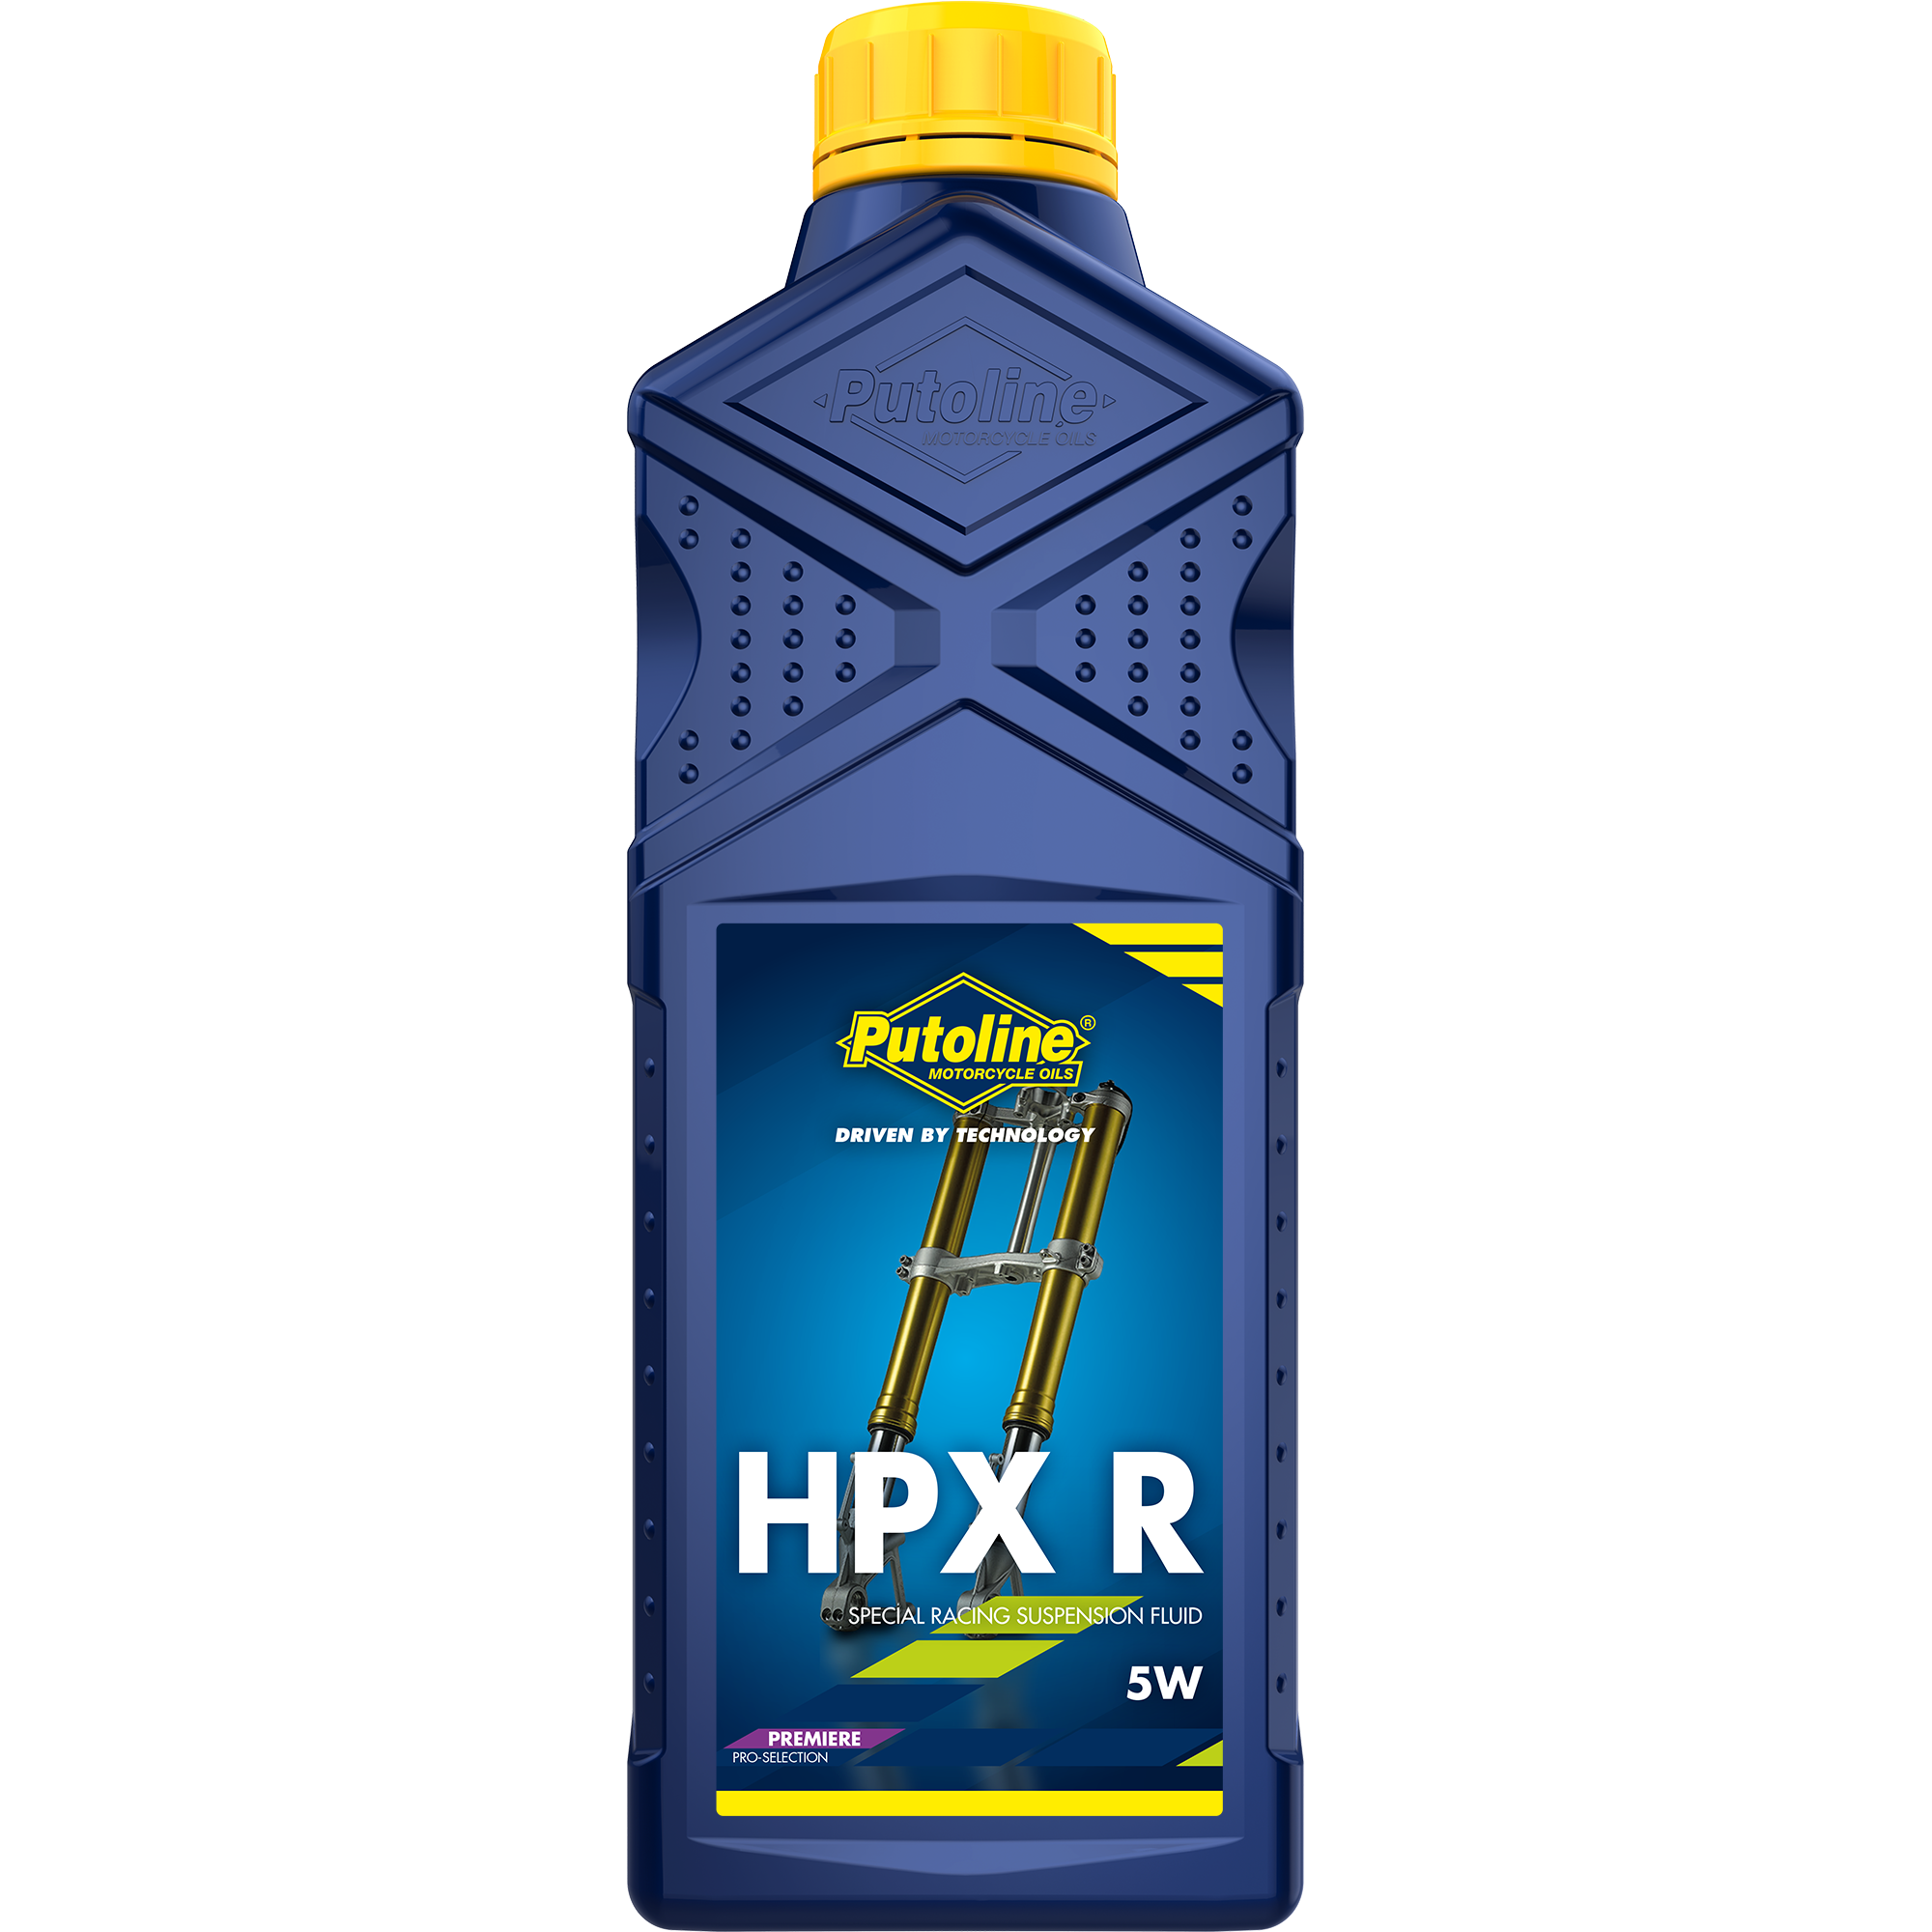 Putoline HPX R 5W, 1 lt